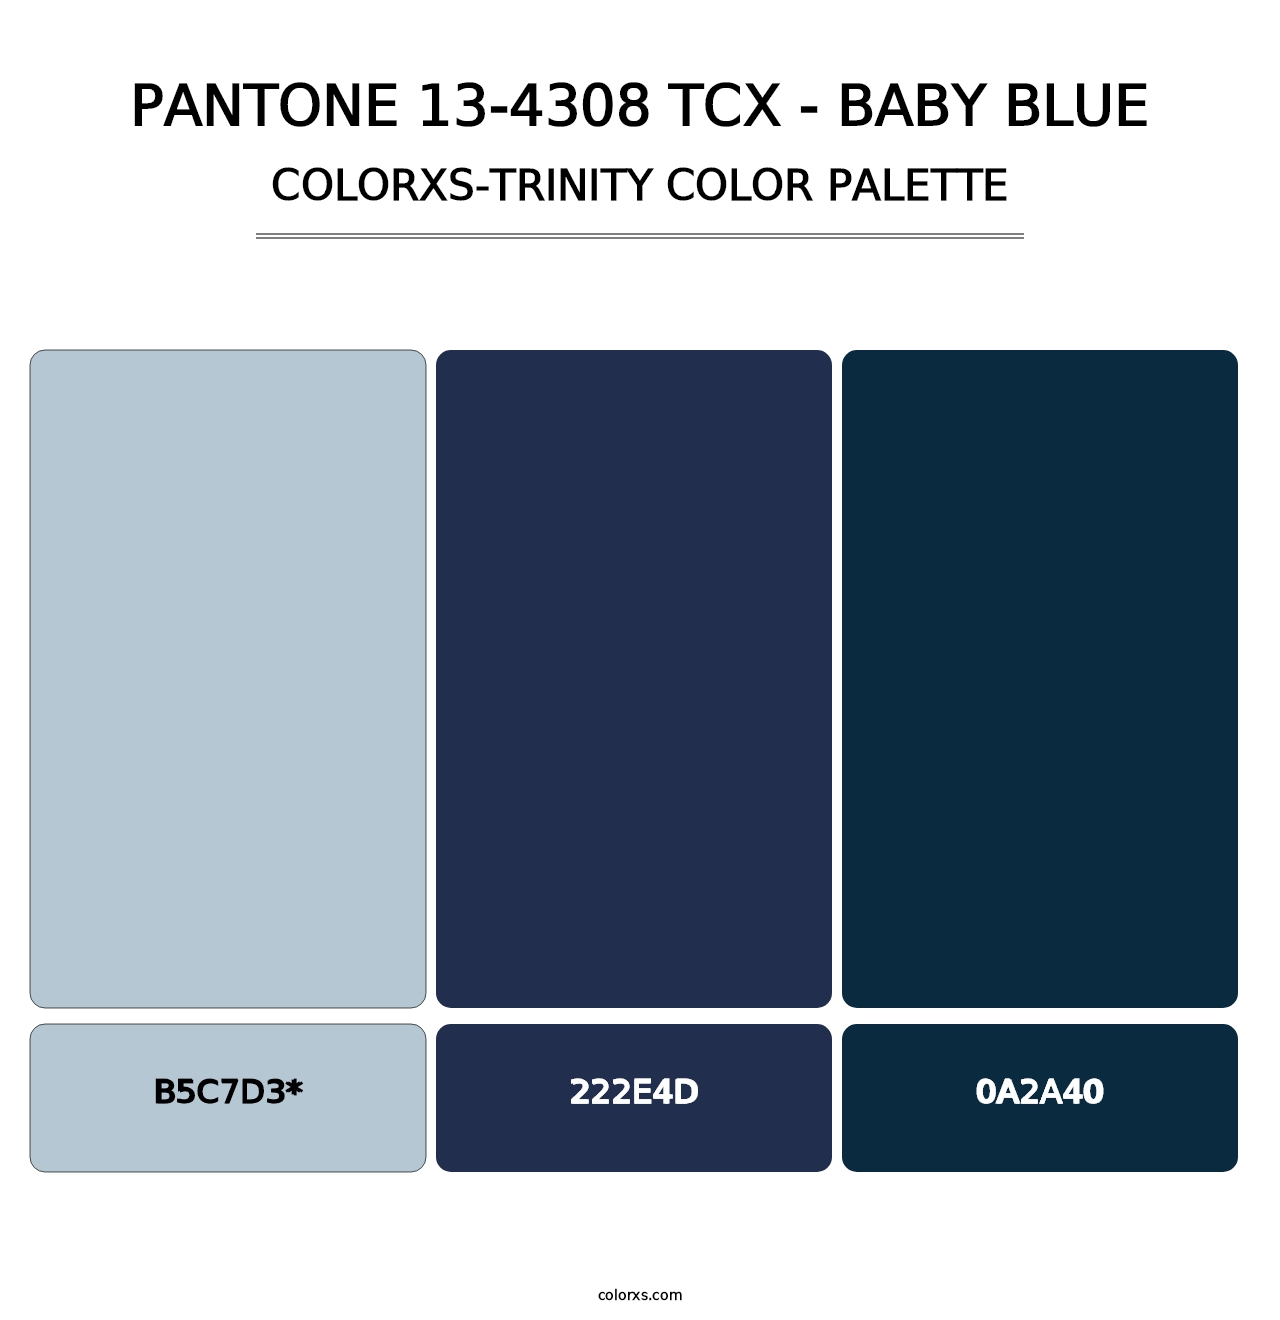 PANTONE 13-4308 TCX - Baby Blue - Colorxs Trinity Palette